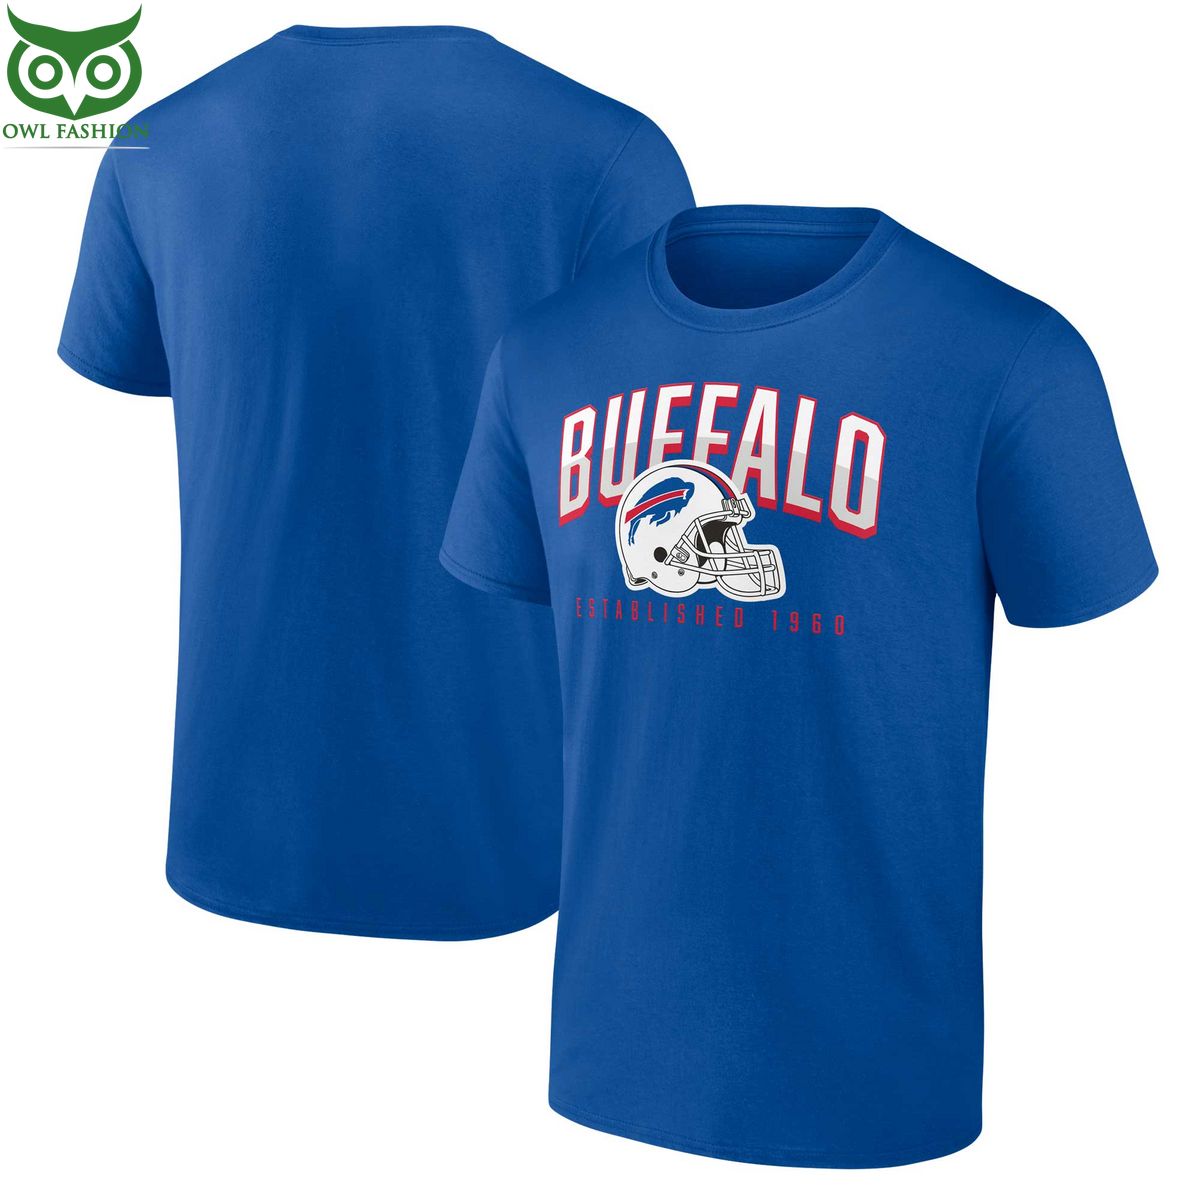 Buffalo Bills Fanatics Branded Royal T Shirt Your beauty is irresistible.